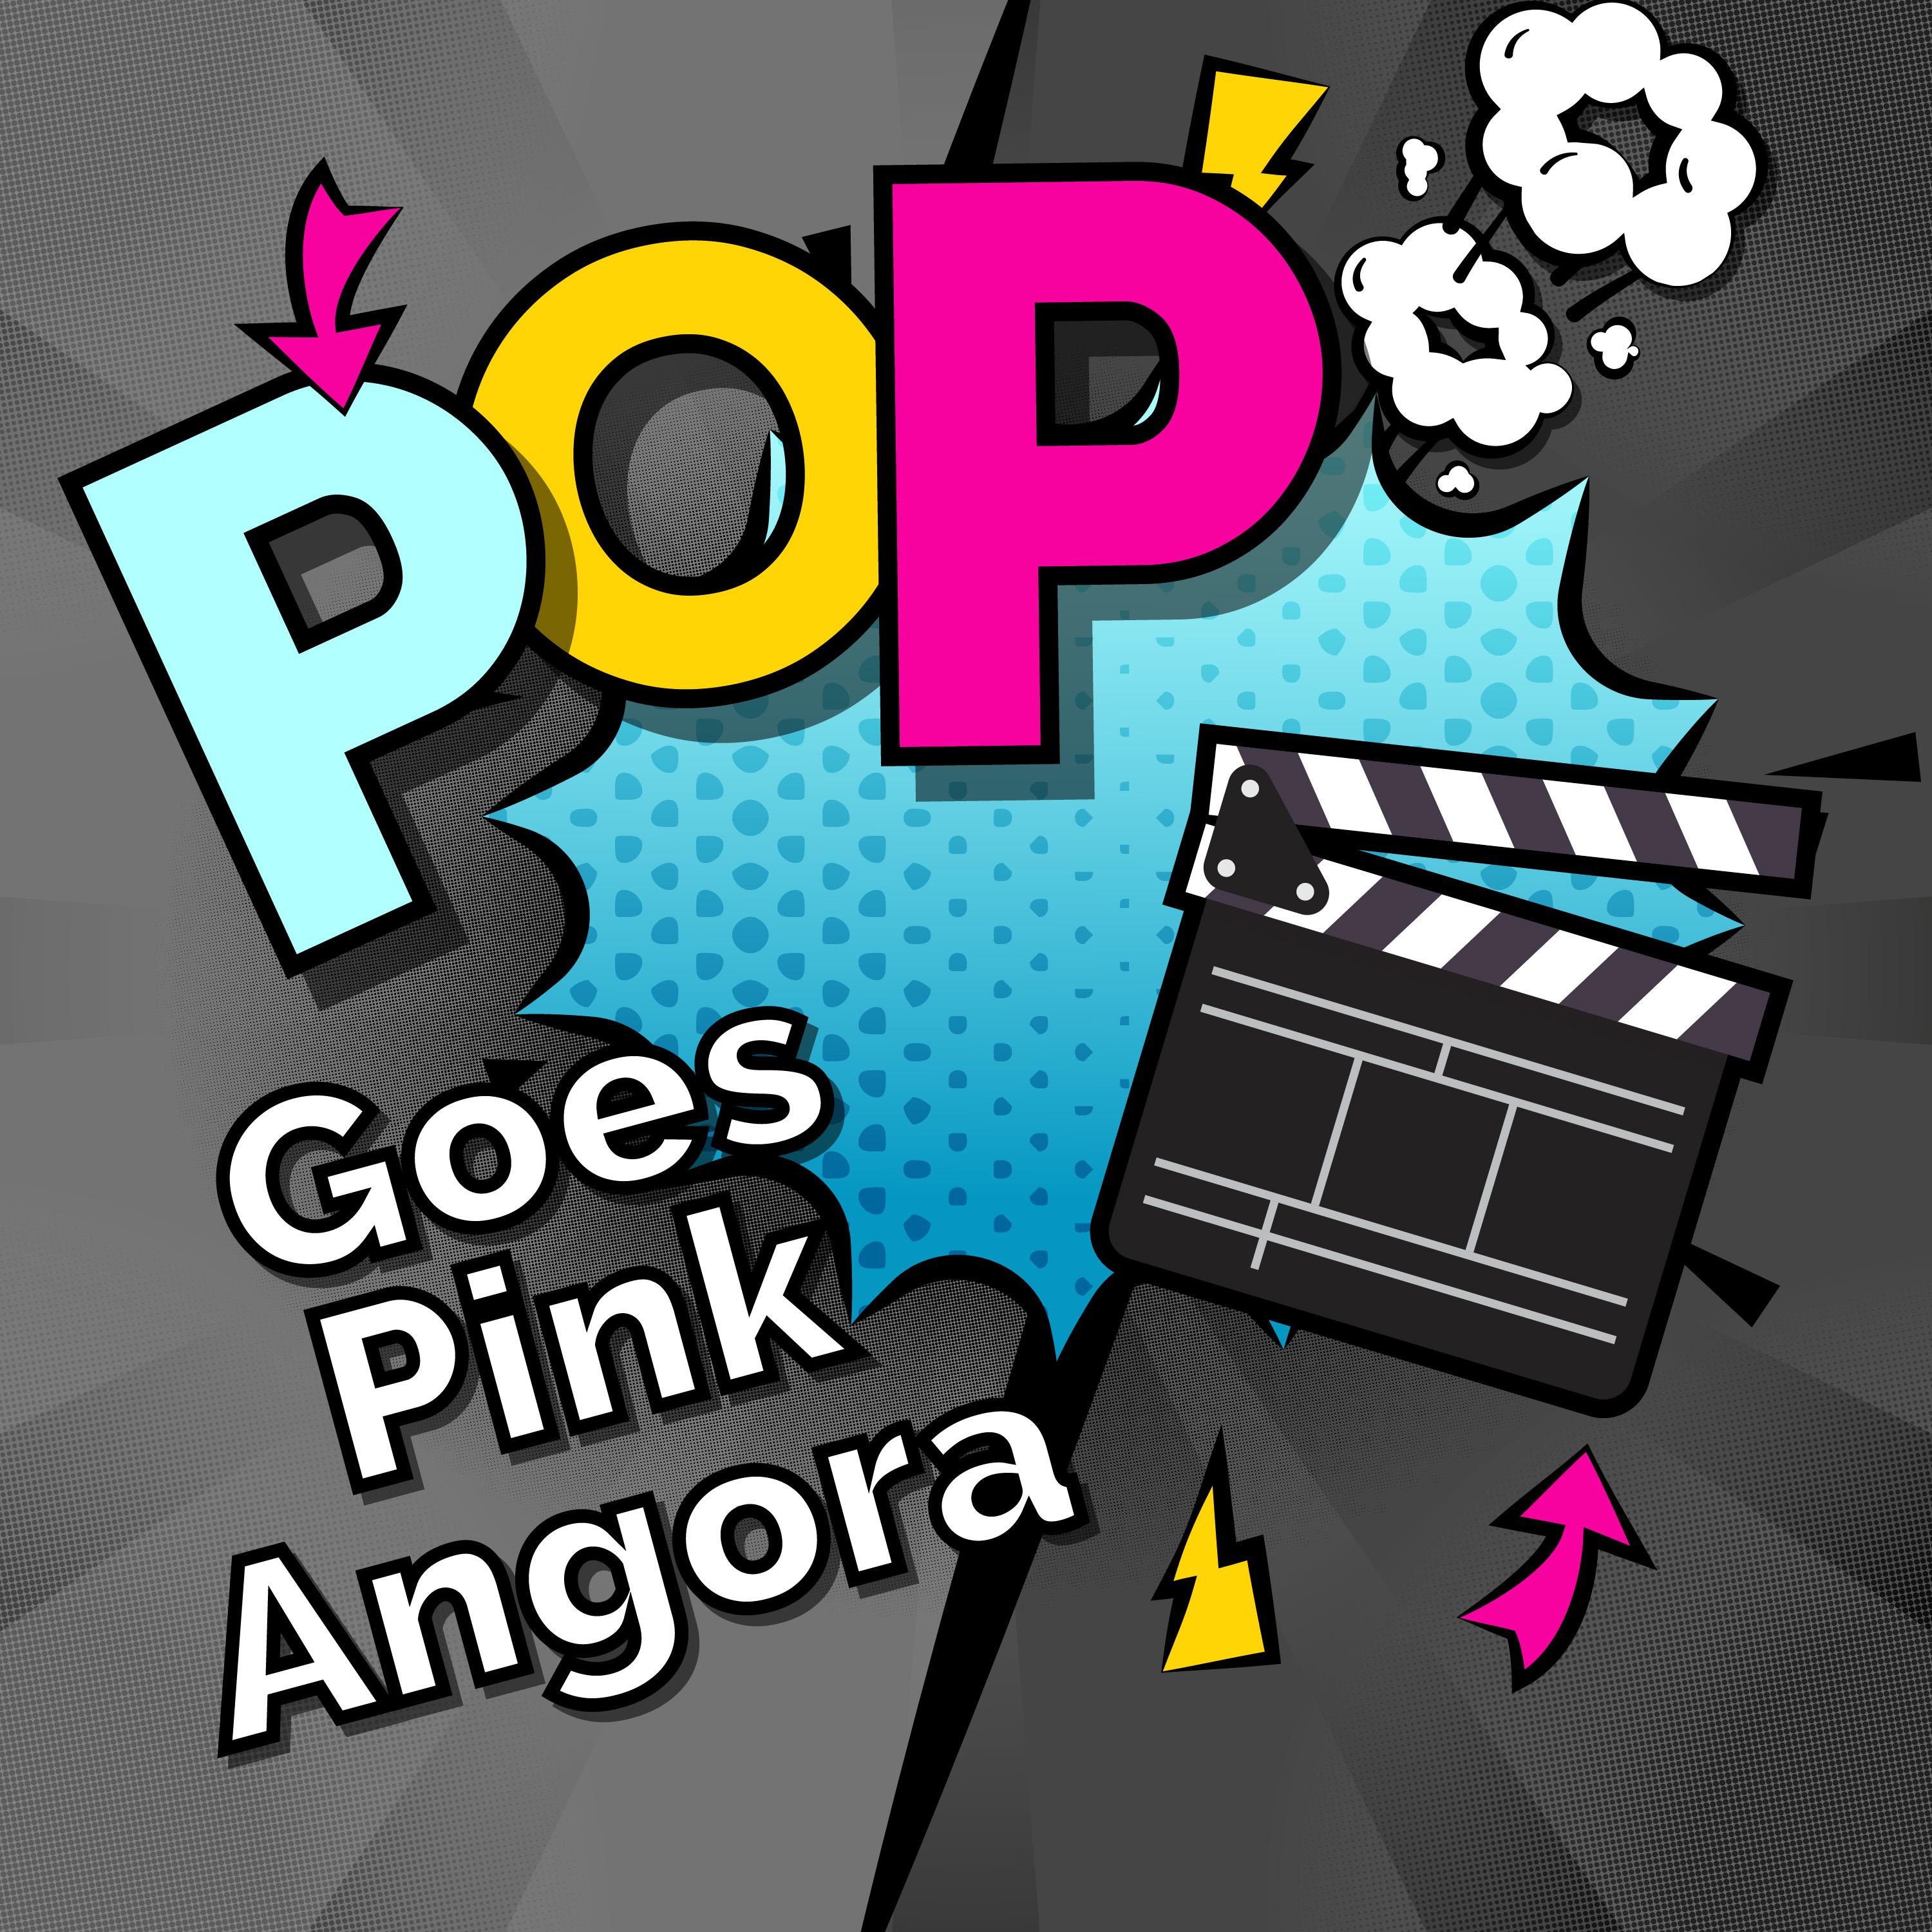 Pop Goes Pink Angora